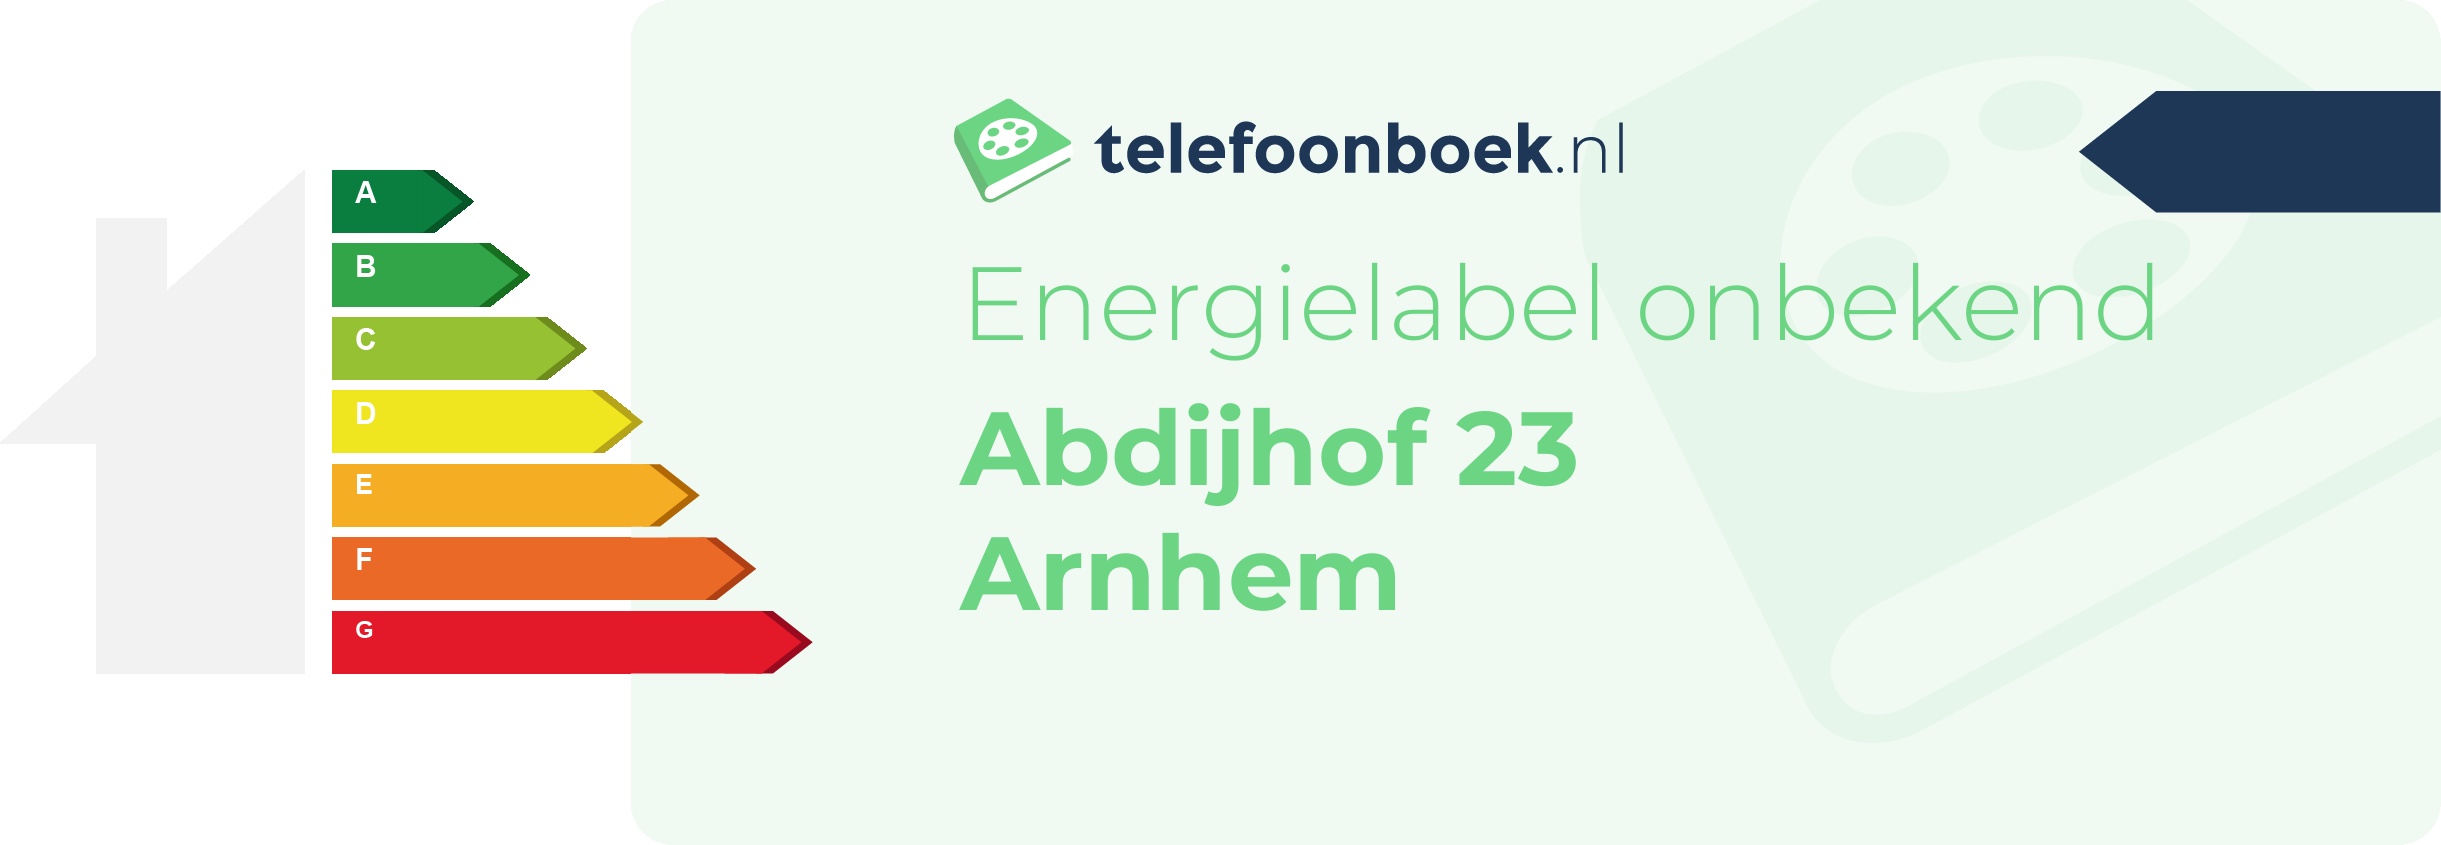 Energielabel Abdijhof 23 Arnhem